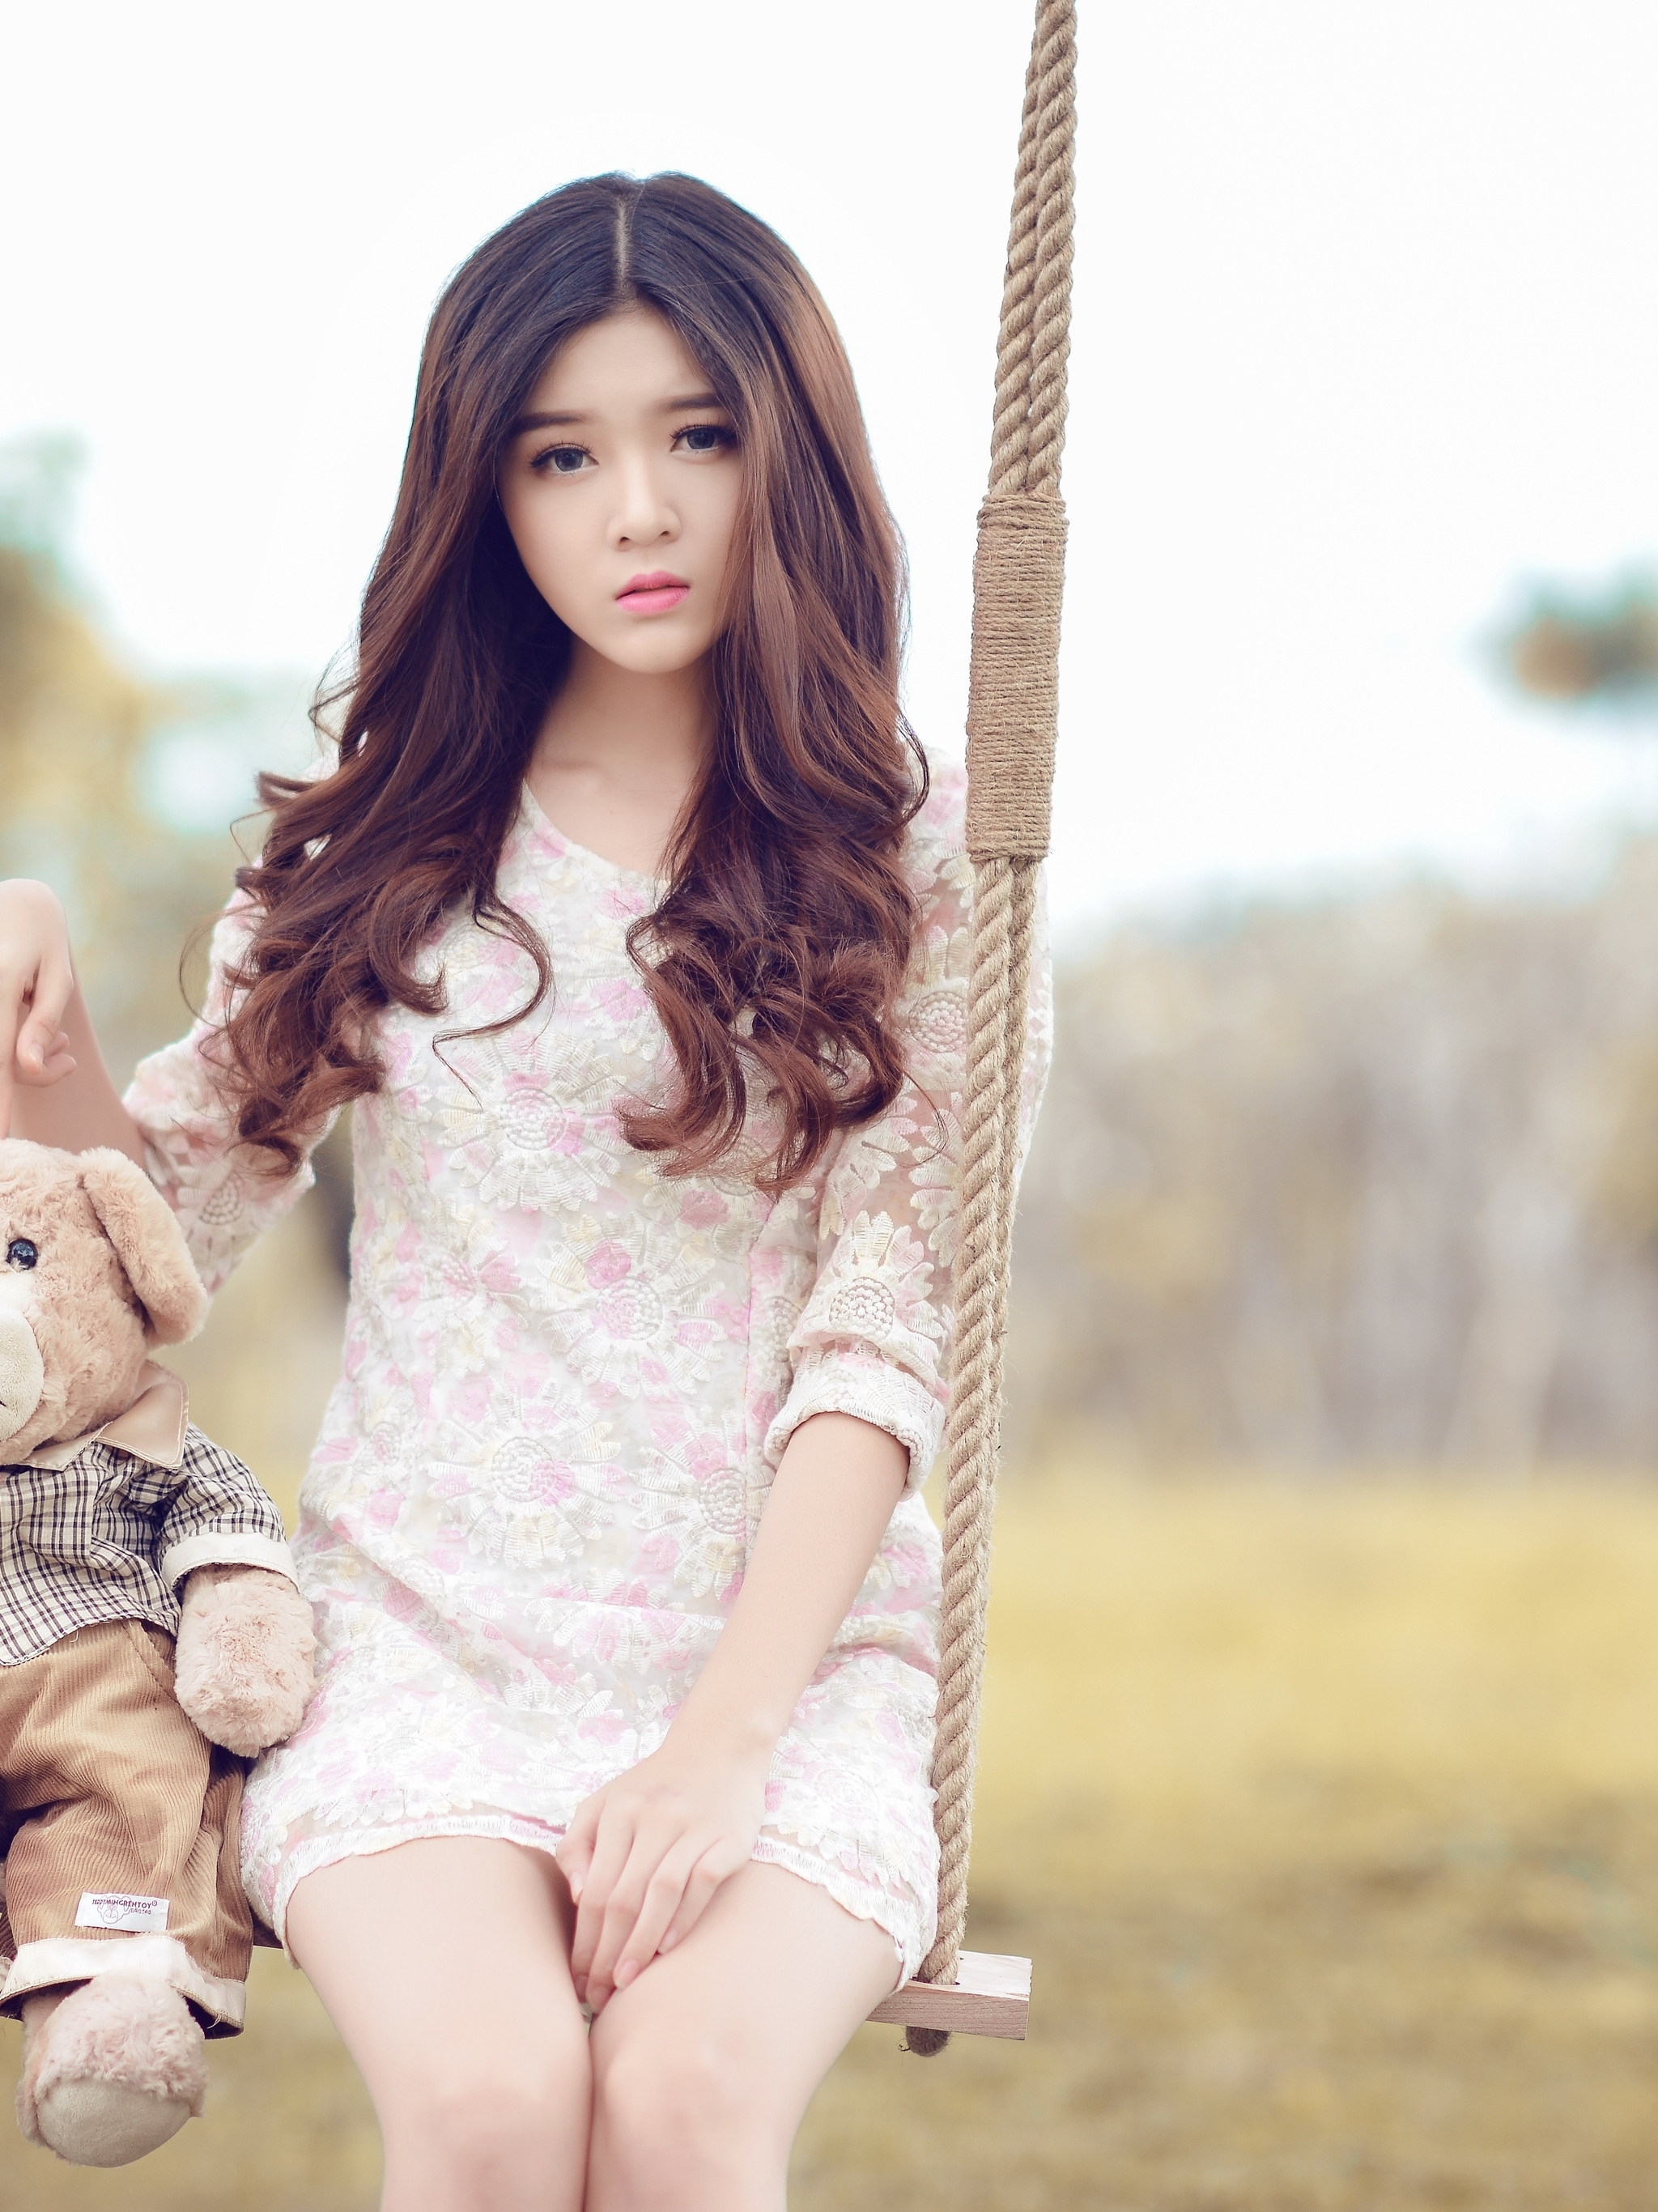 Image: Girl, asian, toy, teddy bear, swing